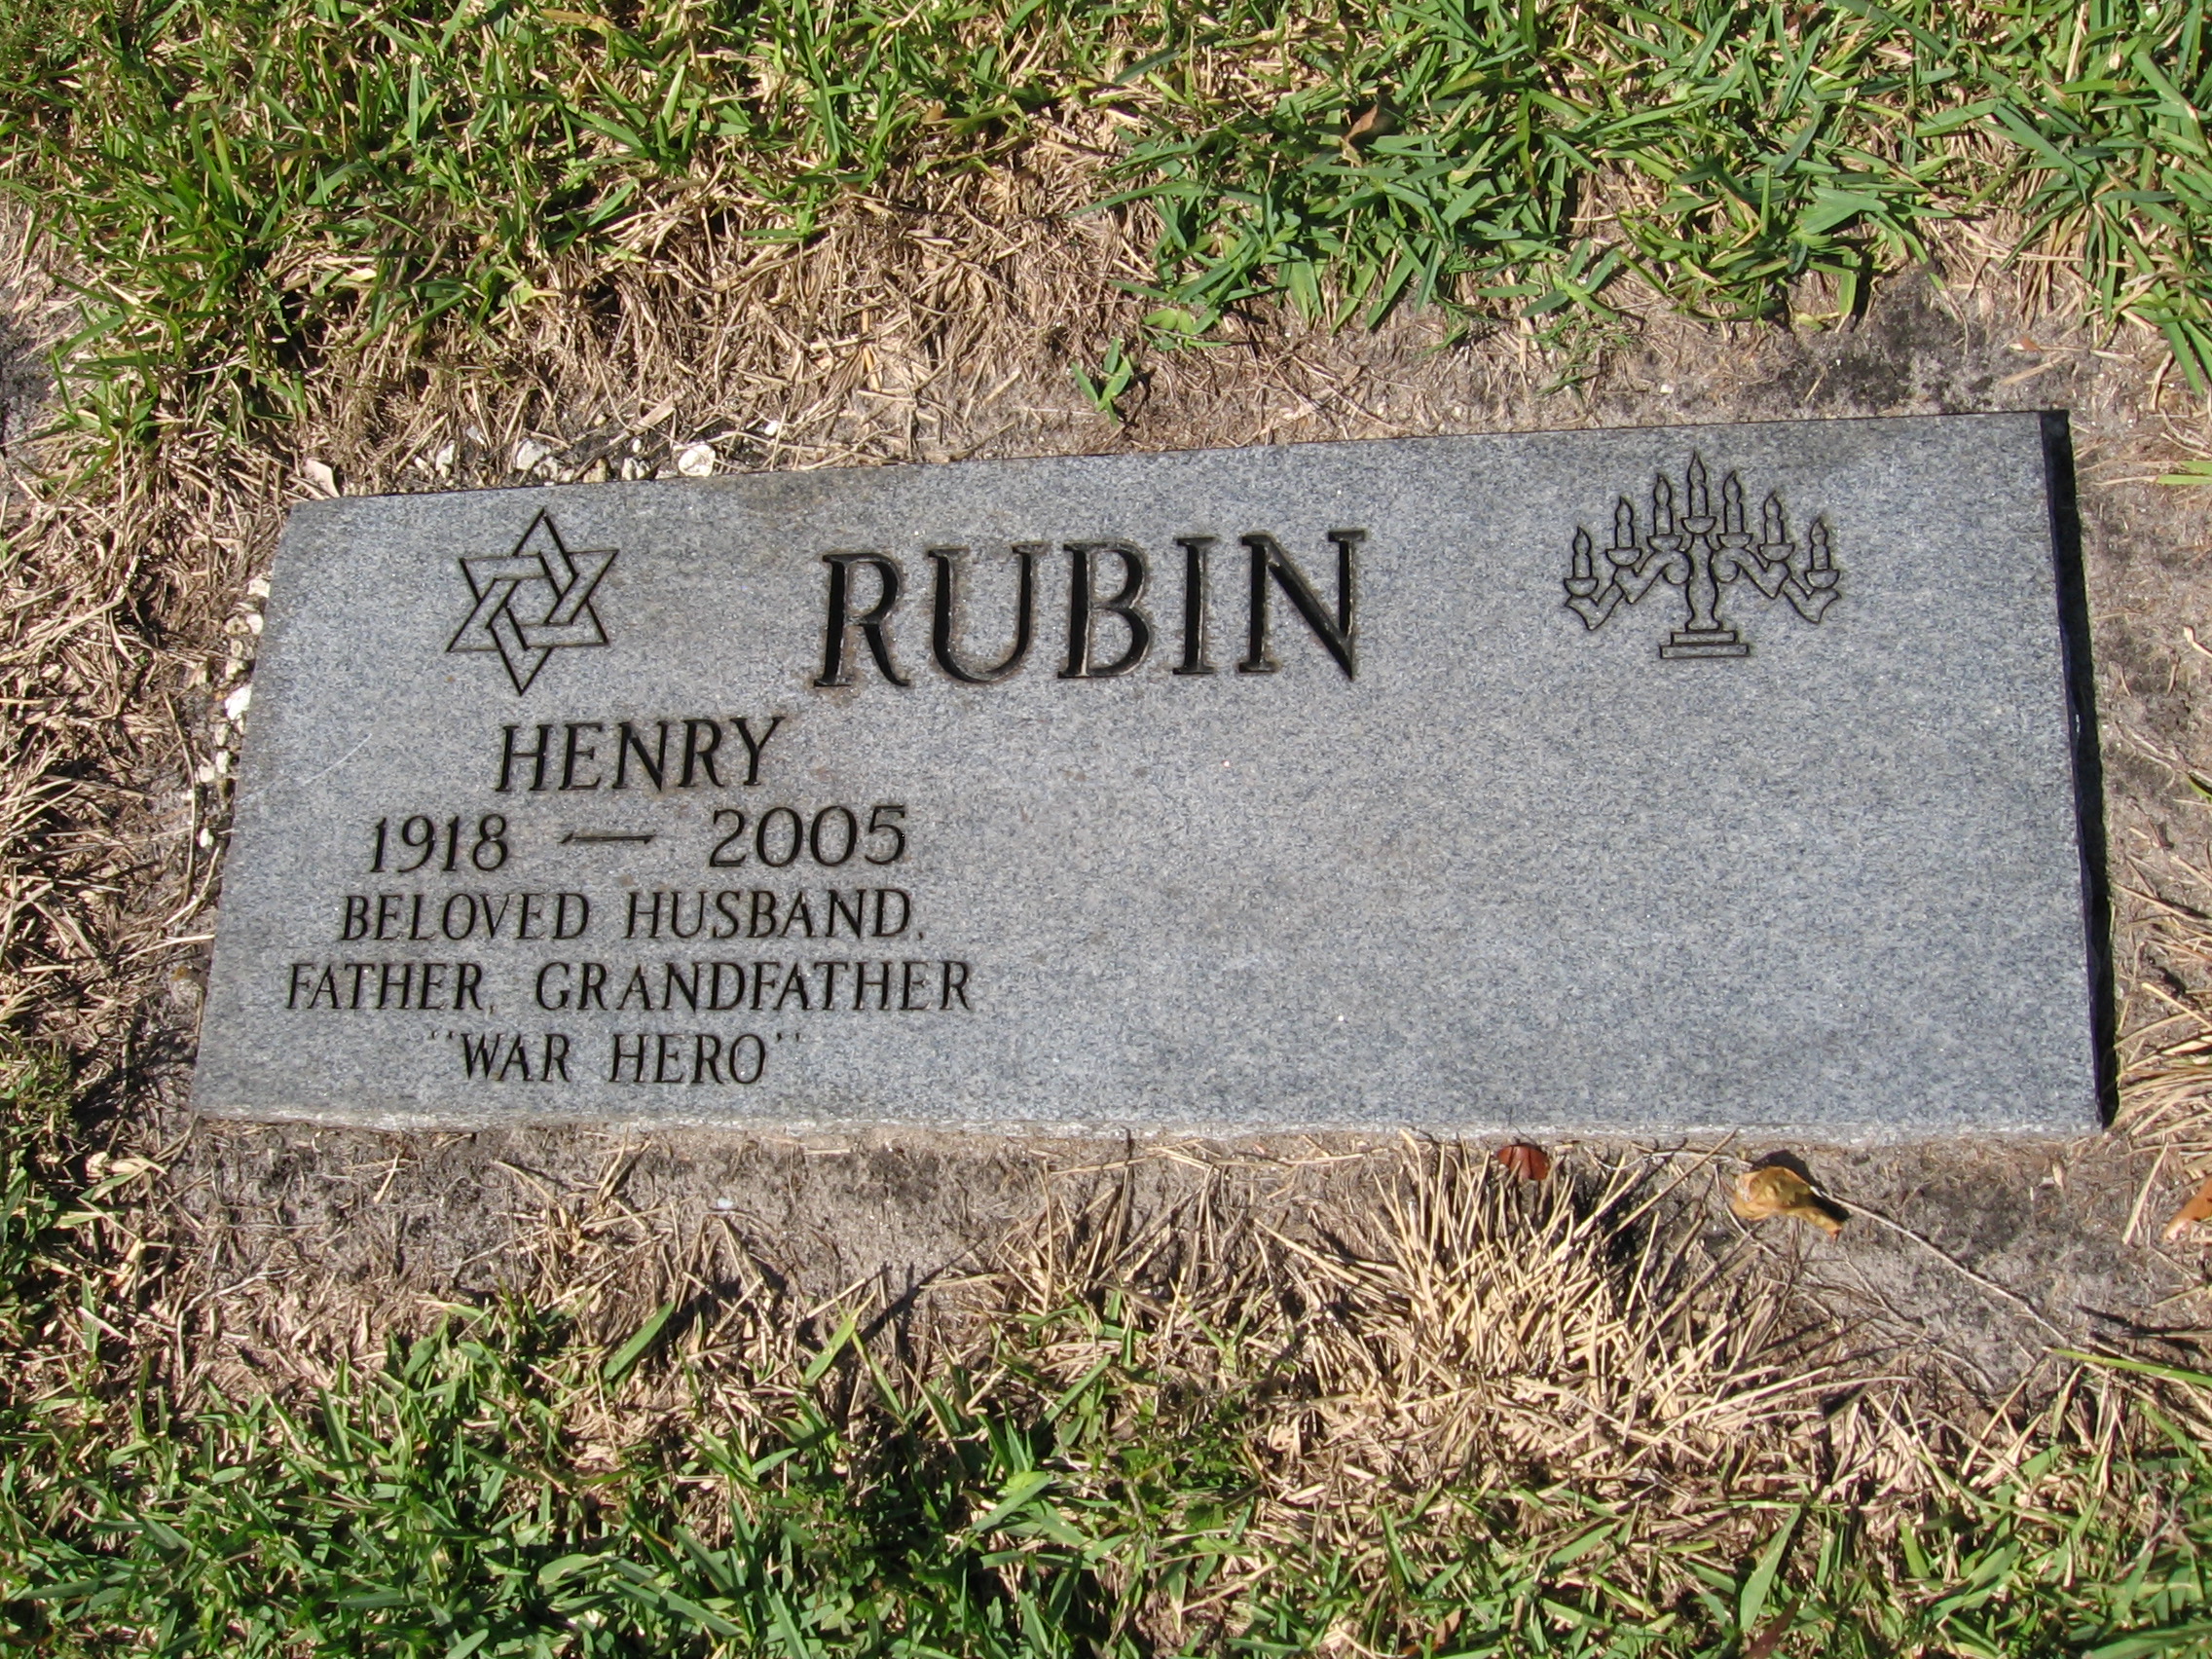 Henry Rubin